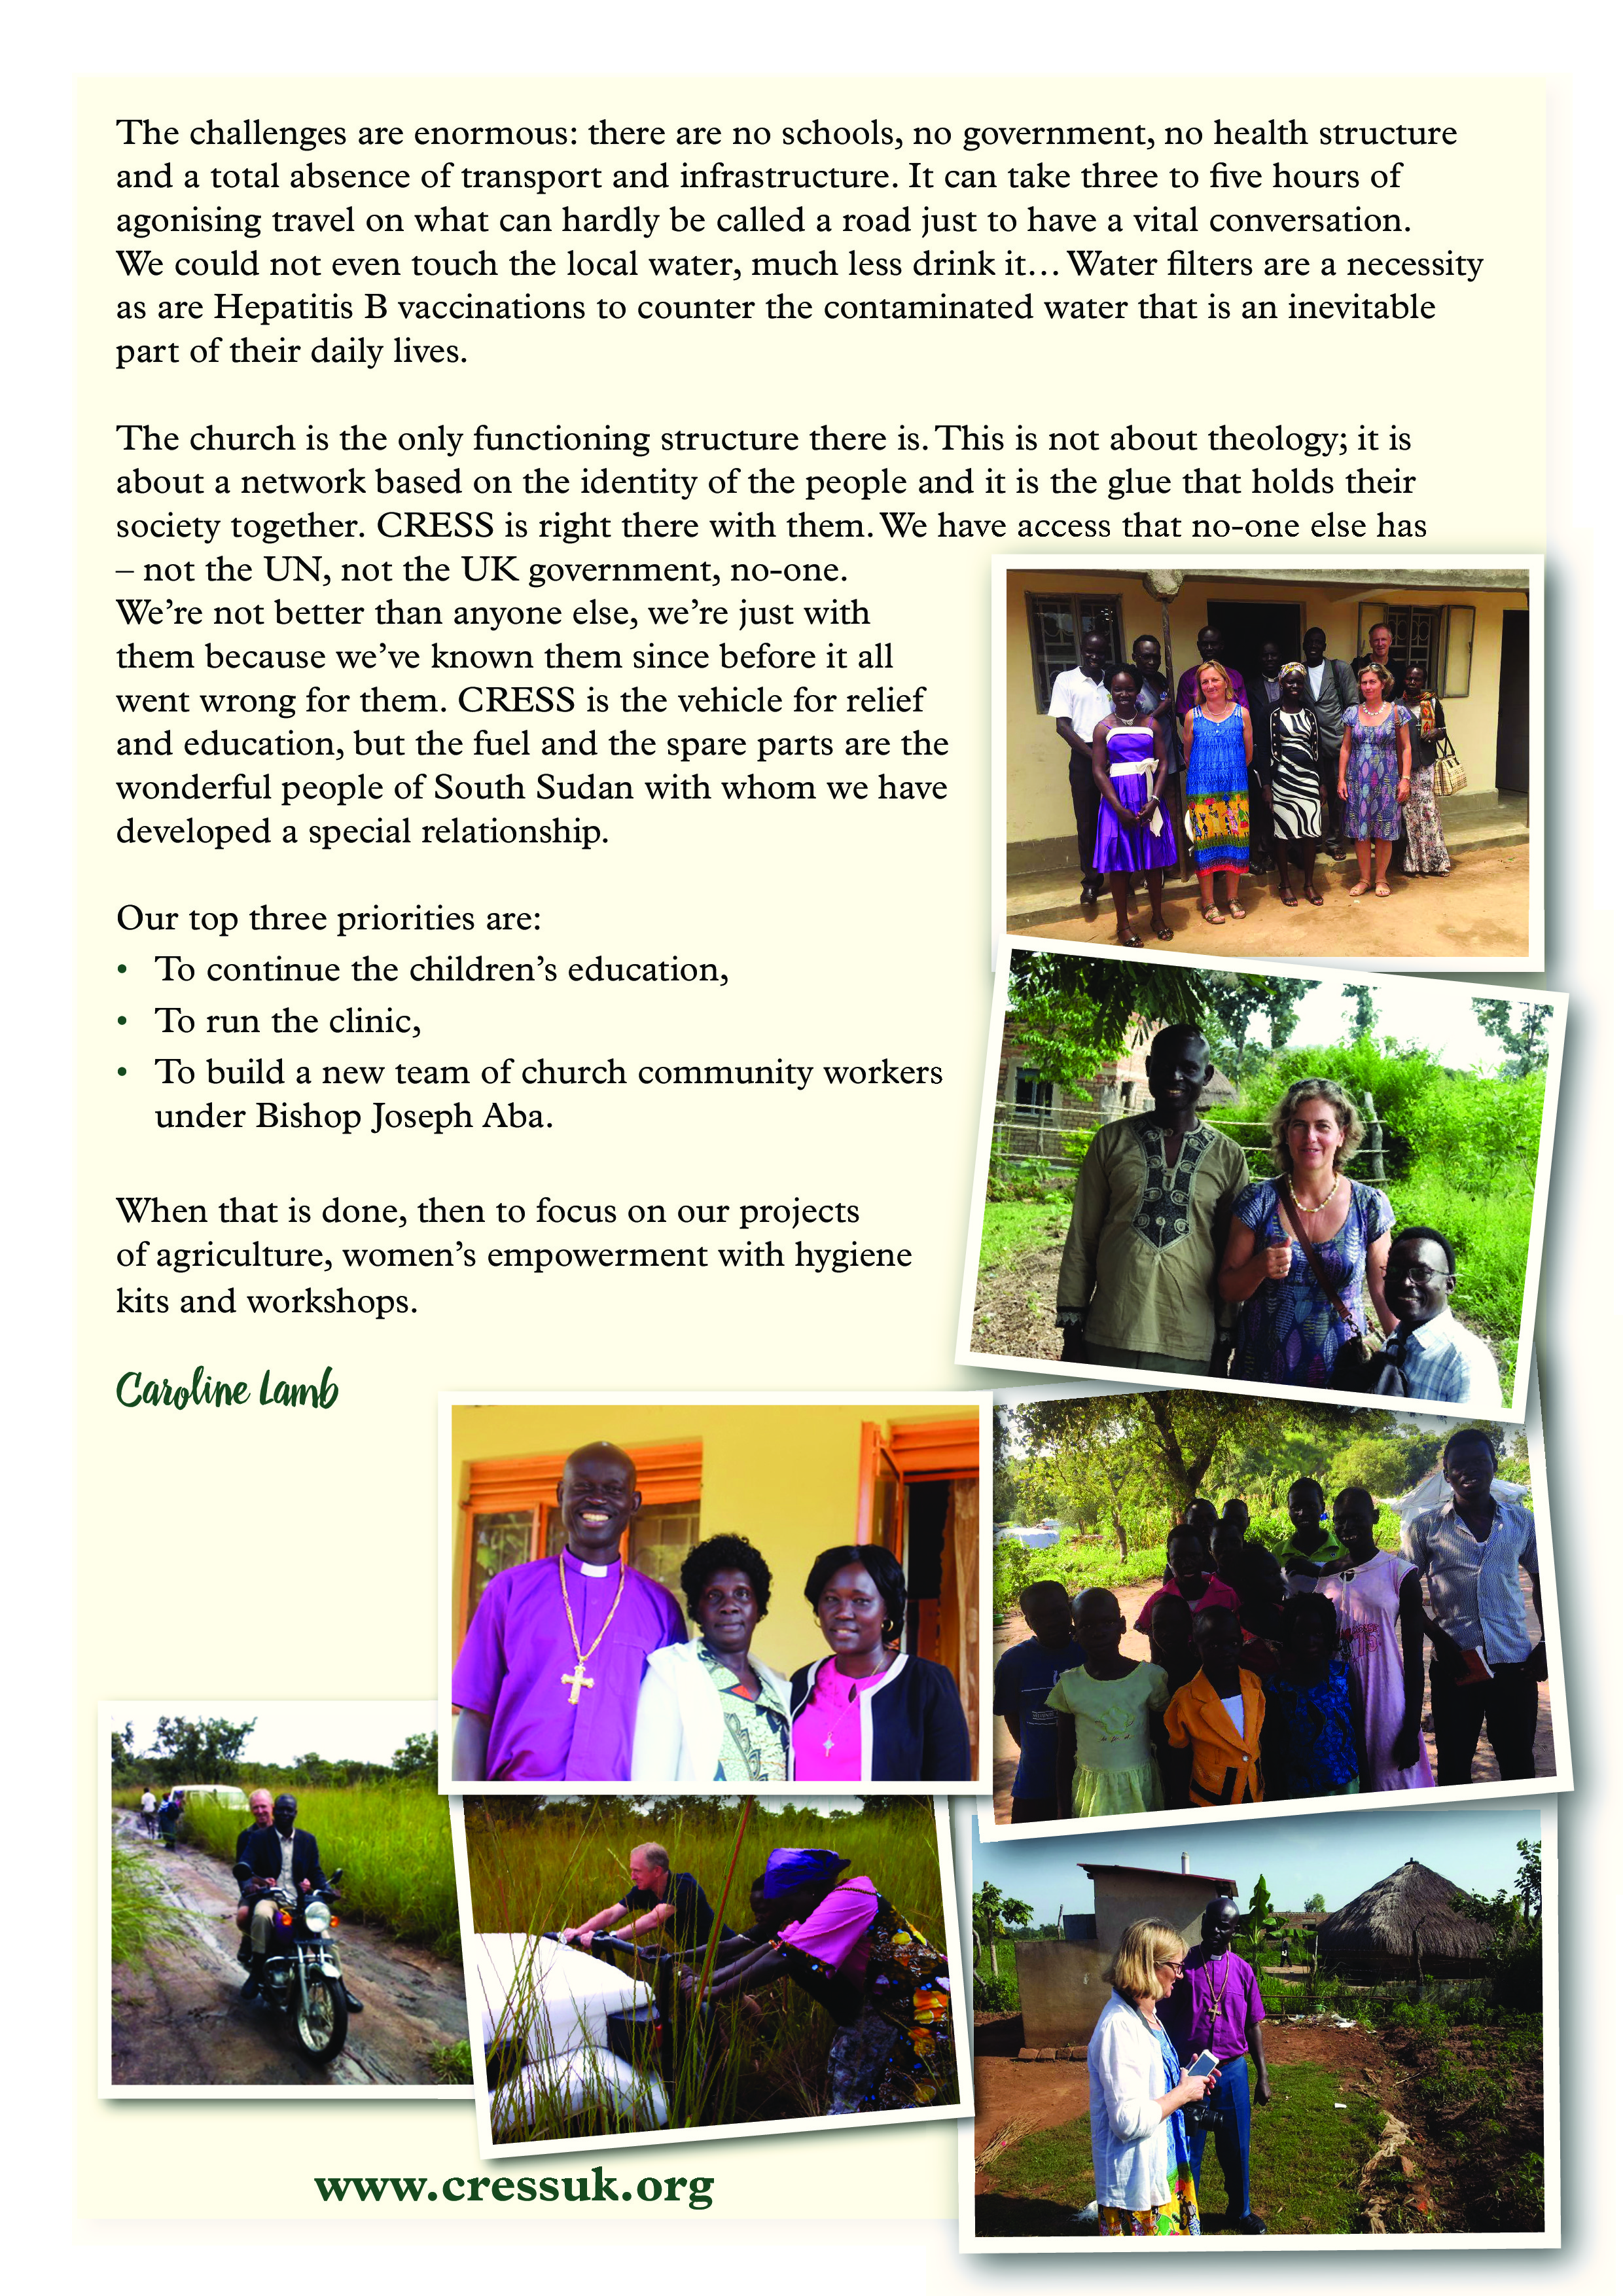 Cress Team September visit to Northern Uganda